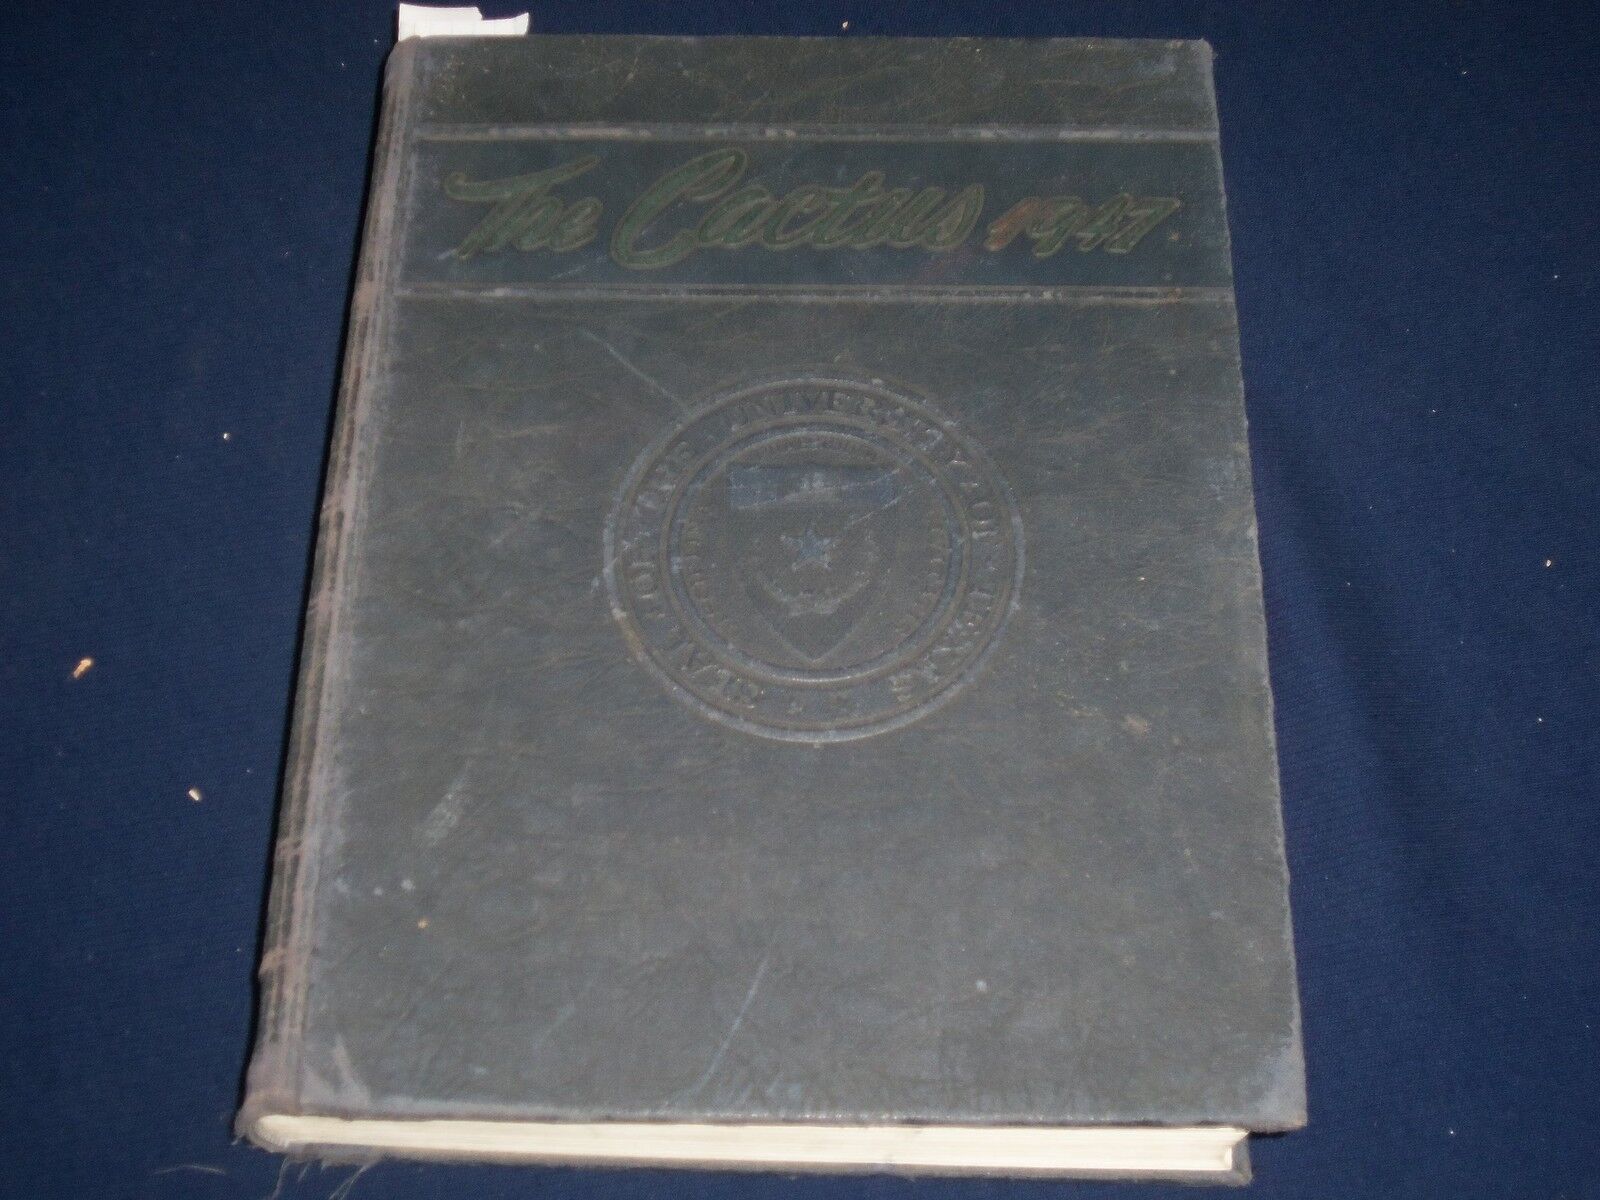 1947 THE CACTUS UNIVERSITY OF TEXAS YEARBOOK - BOBBY LAYNE - JACKSON - YB 350